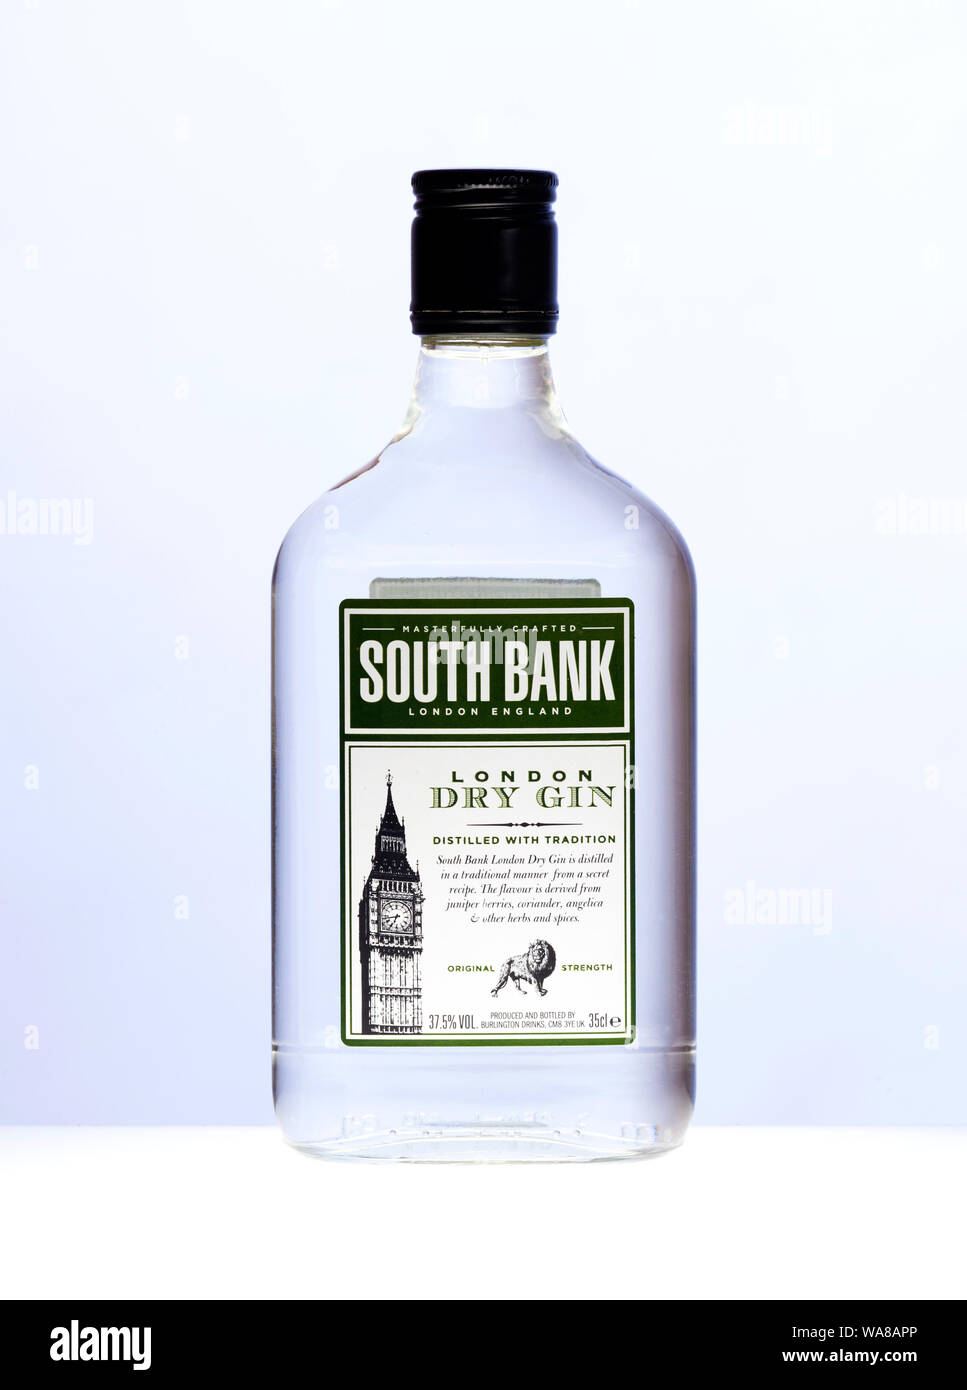 South Bank gin Stock Photo - Alamy